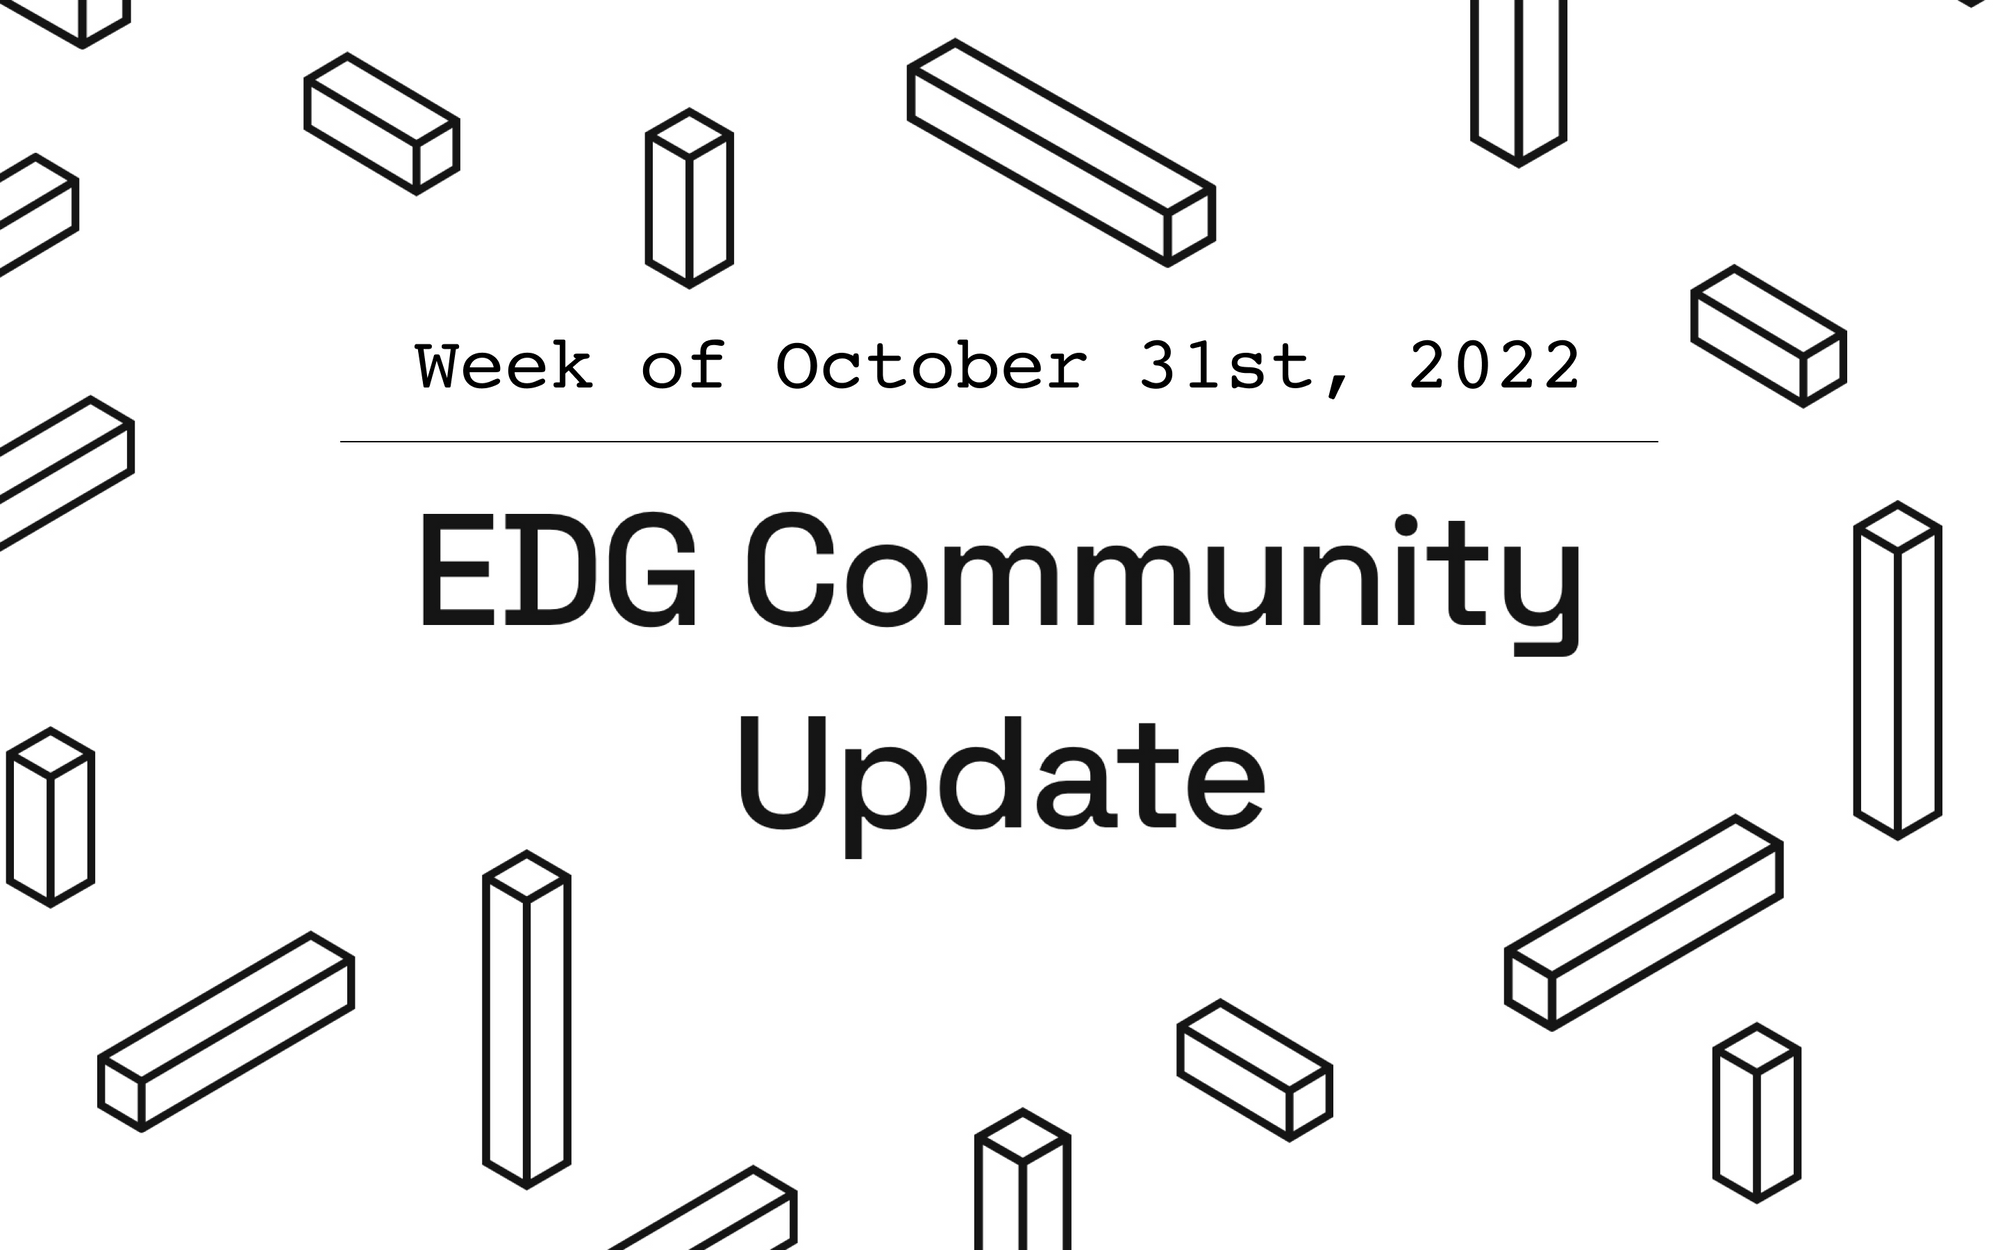 EDG Community Update: Week of October 31st, 2022